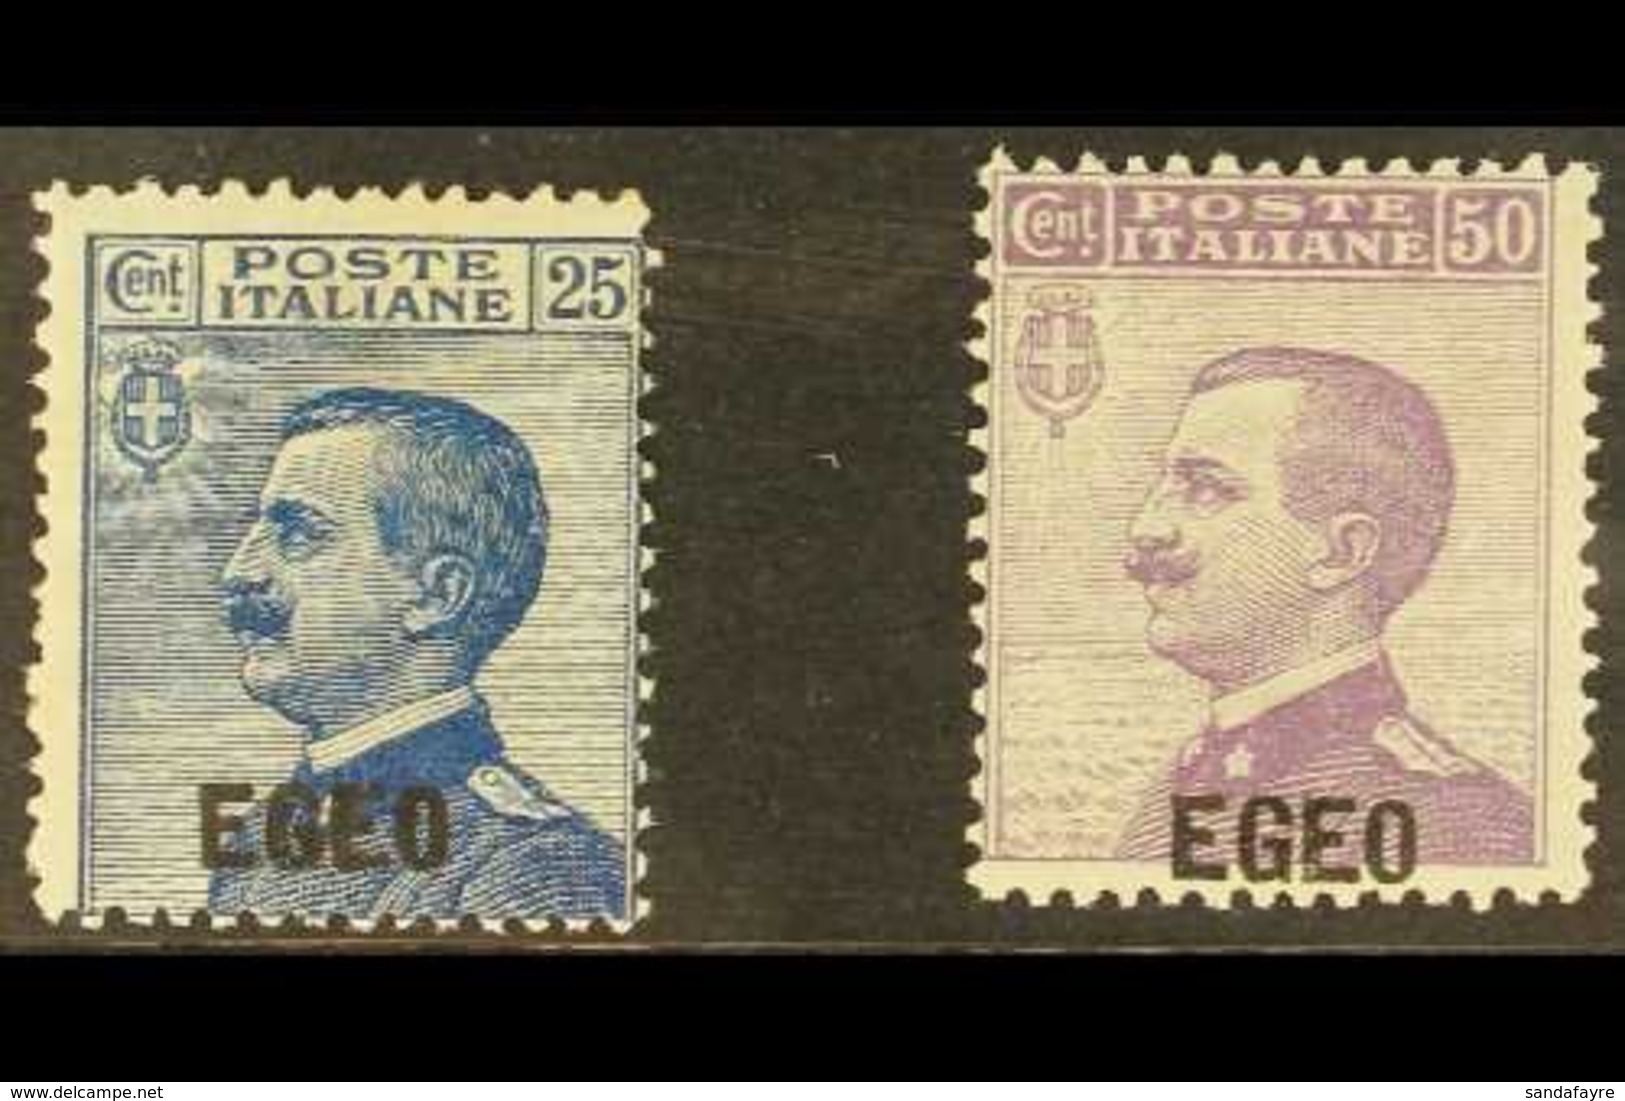 EGEO (DODECANESE ISLANDS)  1912 Overprints Complete Set (SG 1/2, Sassone 1/2), Fine Mint, Fresh. (2 Stamps) For More Ima - Andere & Zonder Classificatie